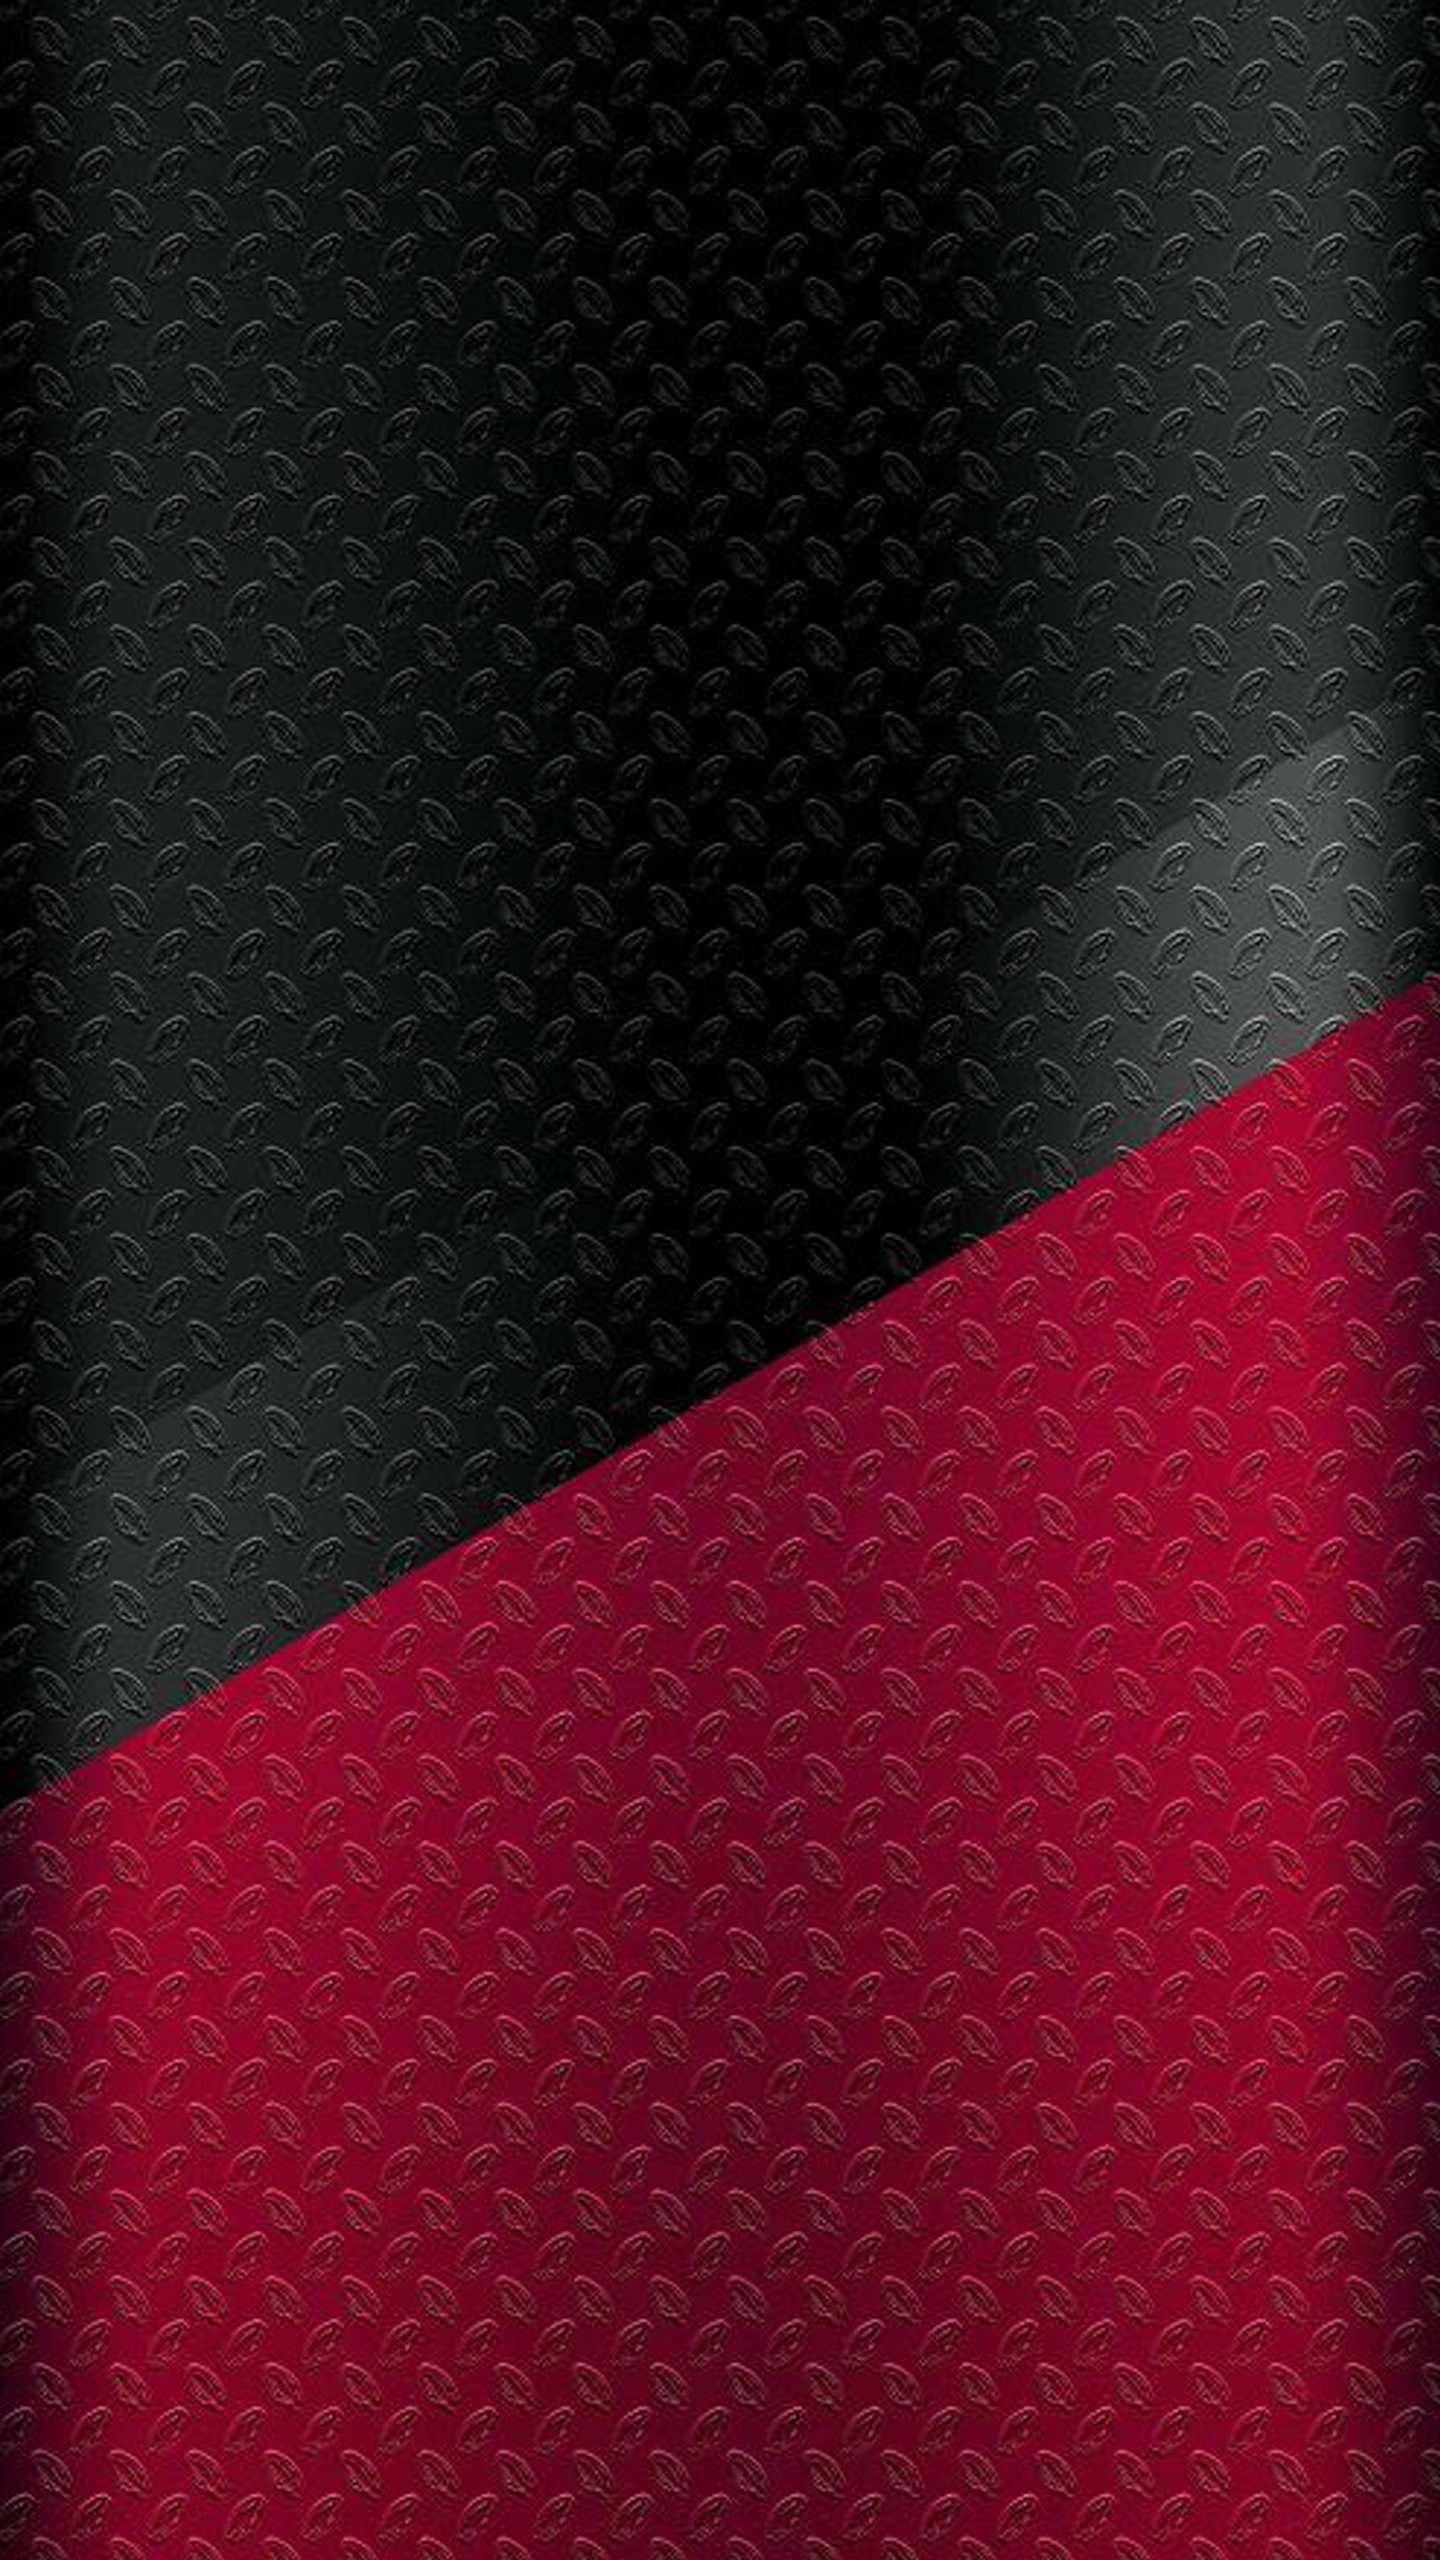 Dark S7 Edge Wallpaper 06 – Black and Red Metal Texture | HD Wallpapers